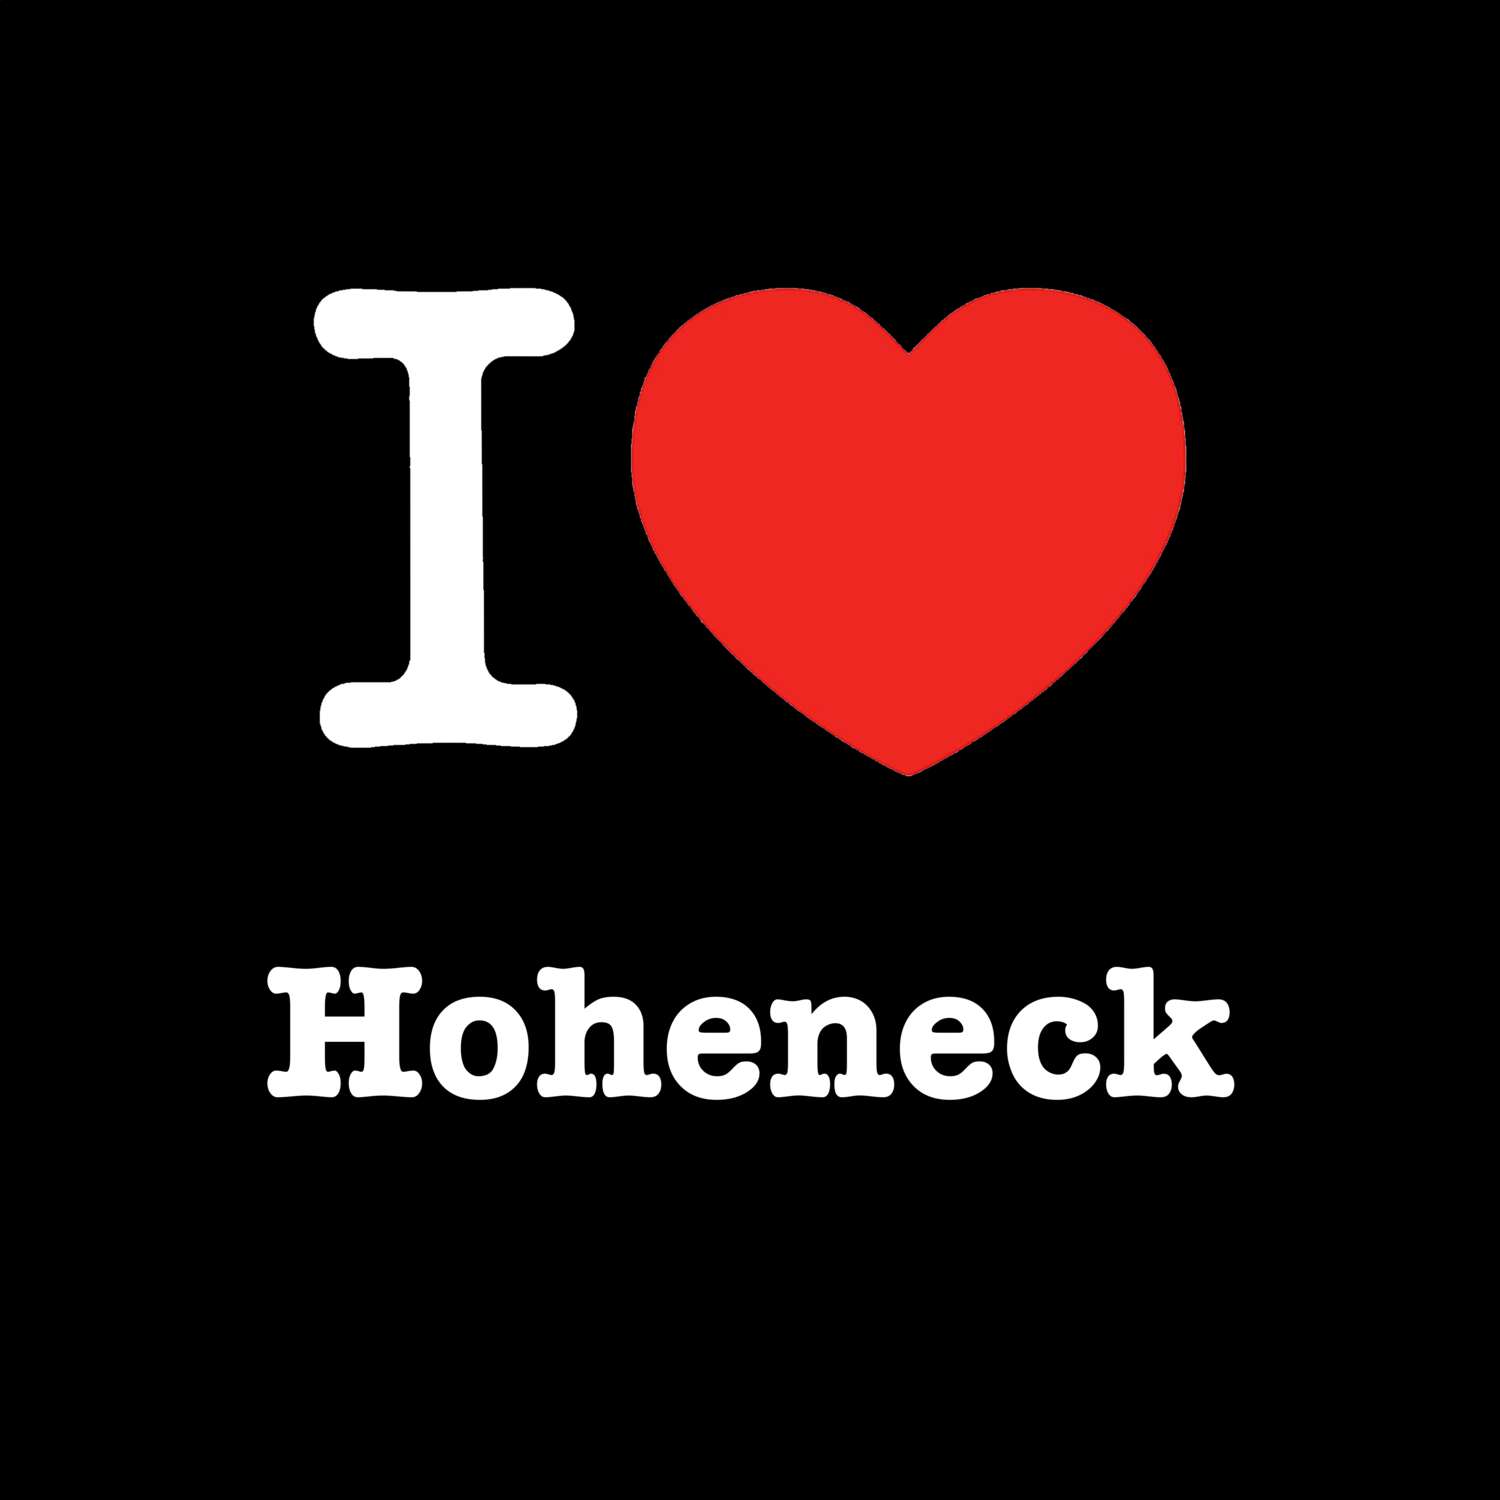 Hoheneck T-Shirt »I love«